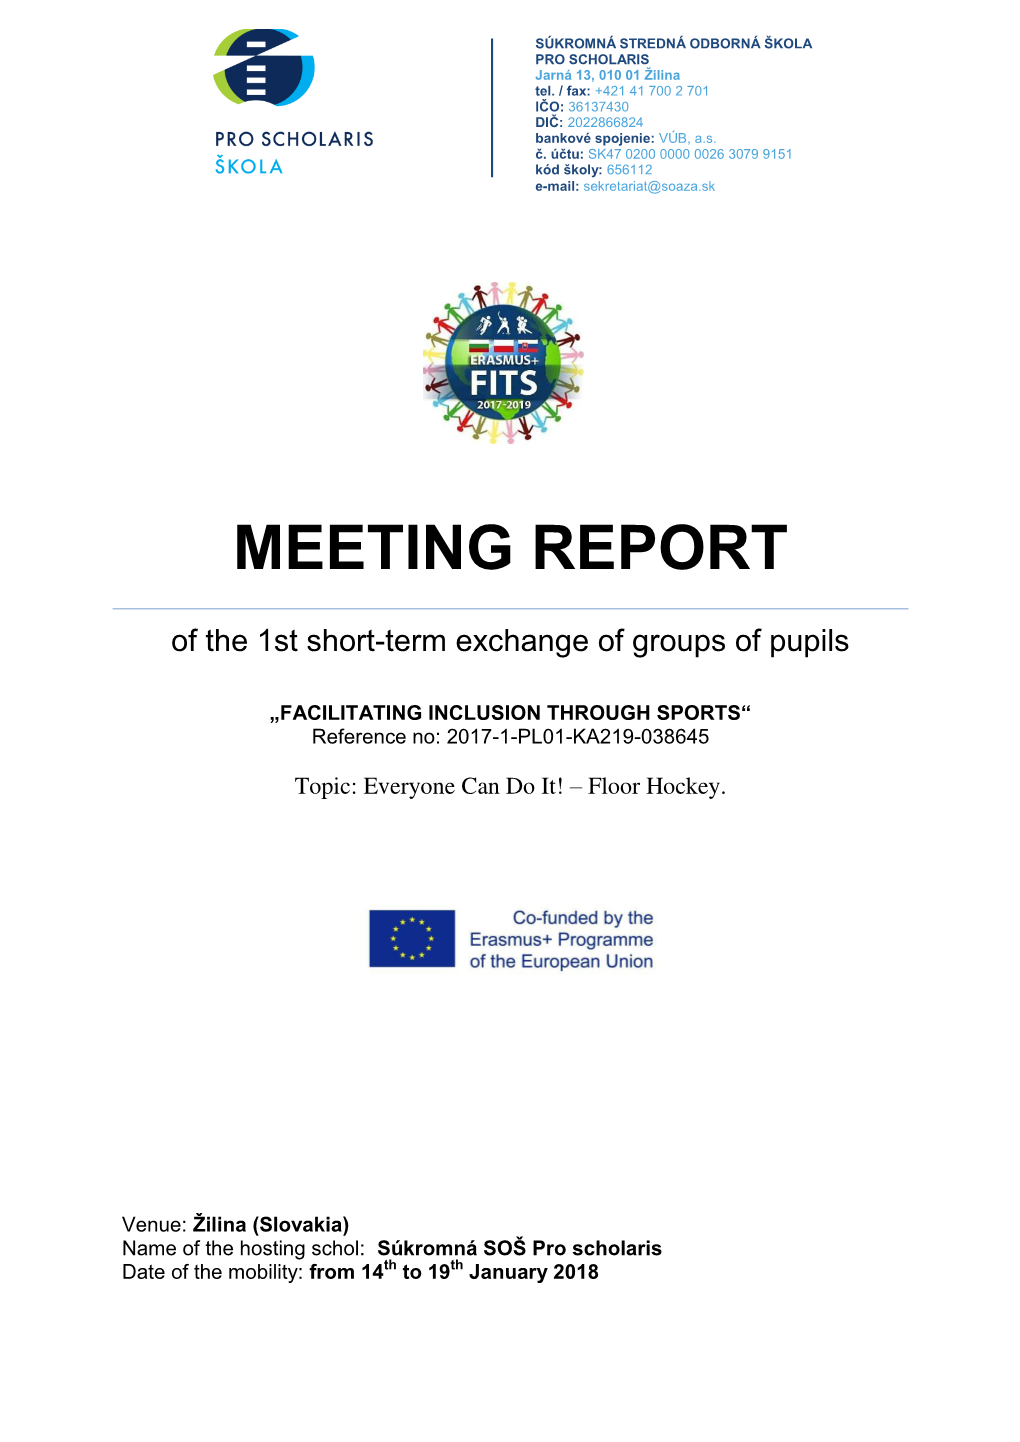 LTT Slovakia Meeting Report